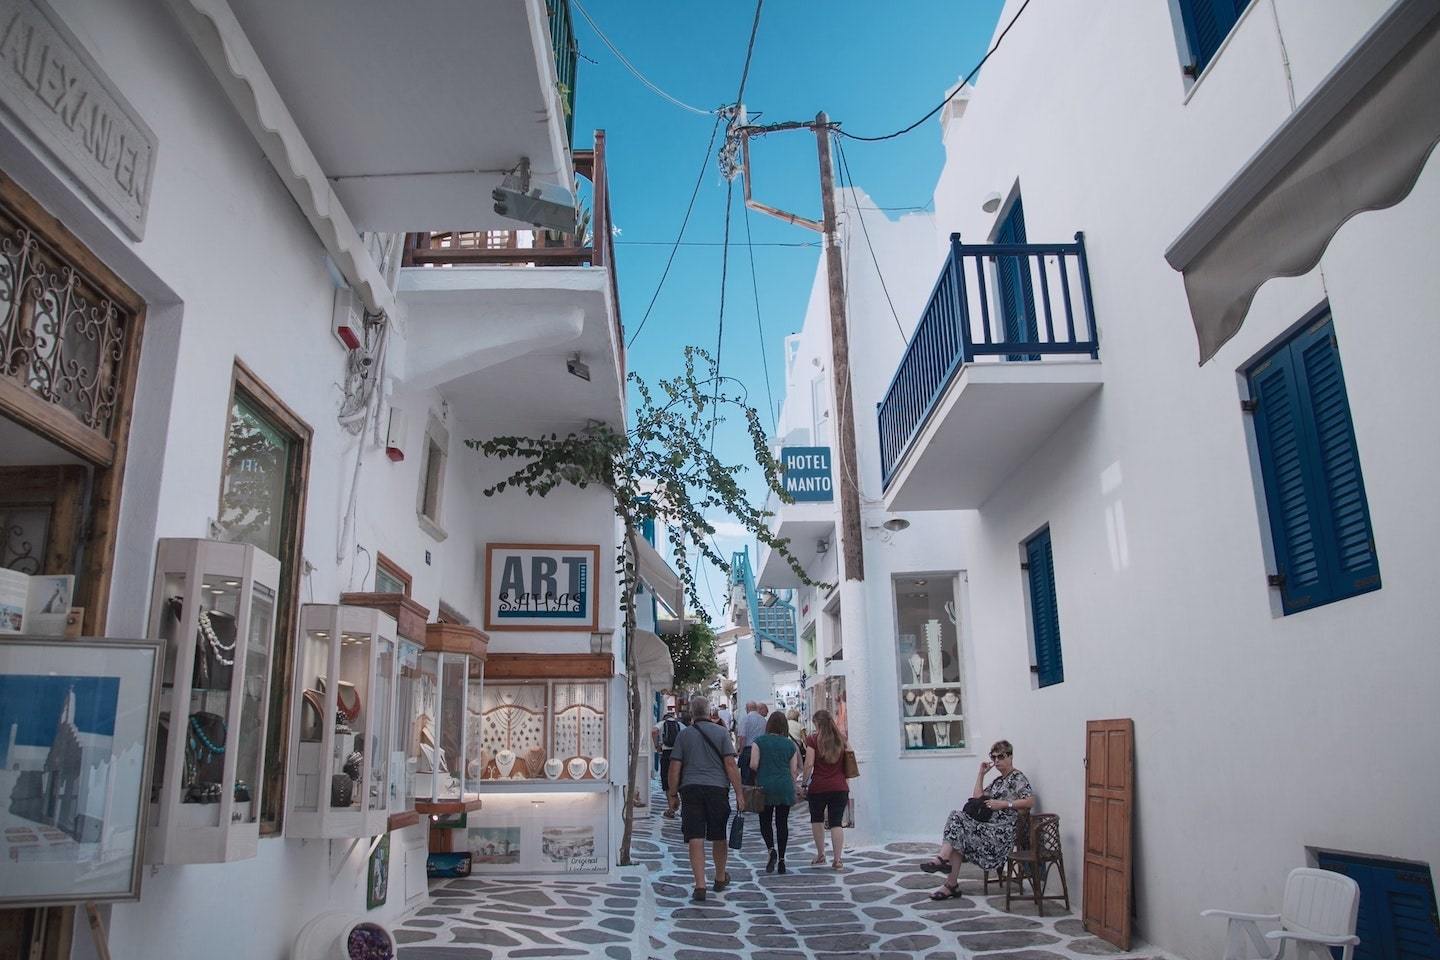 Greece islands: White buildings and shops in a small street in Mykonos, Greece